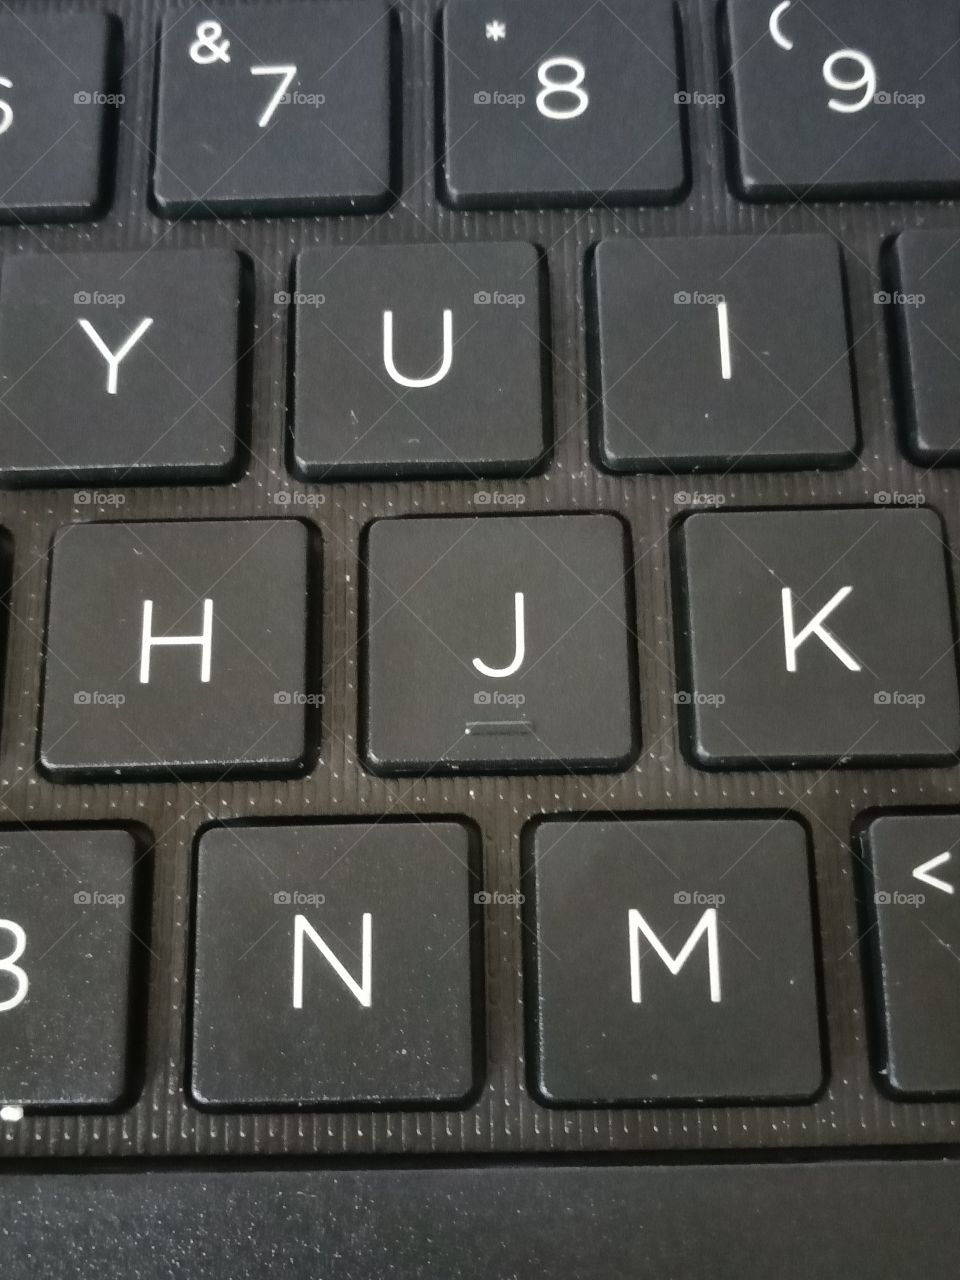 a keyboard up close